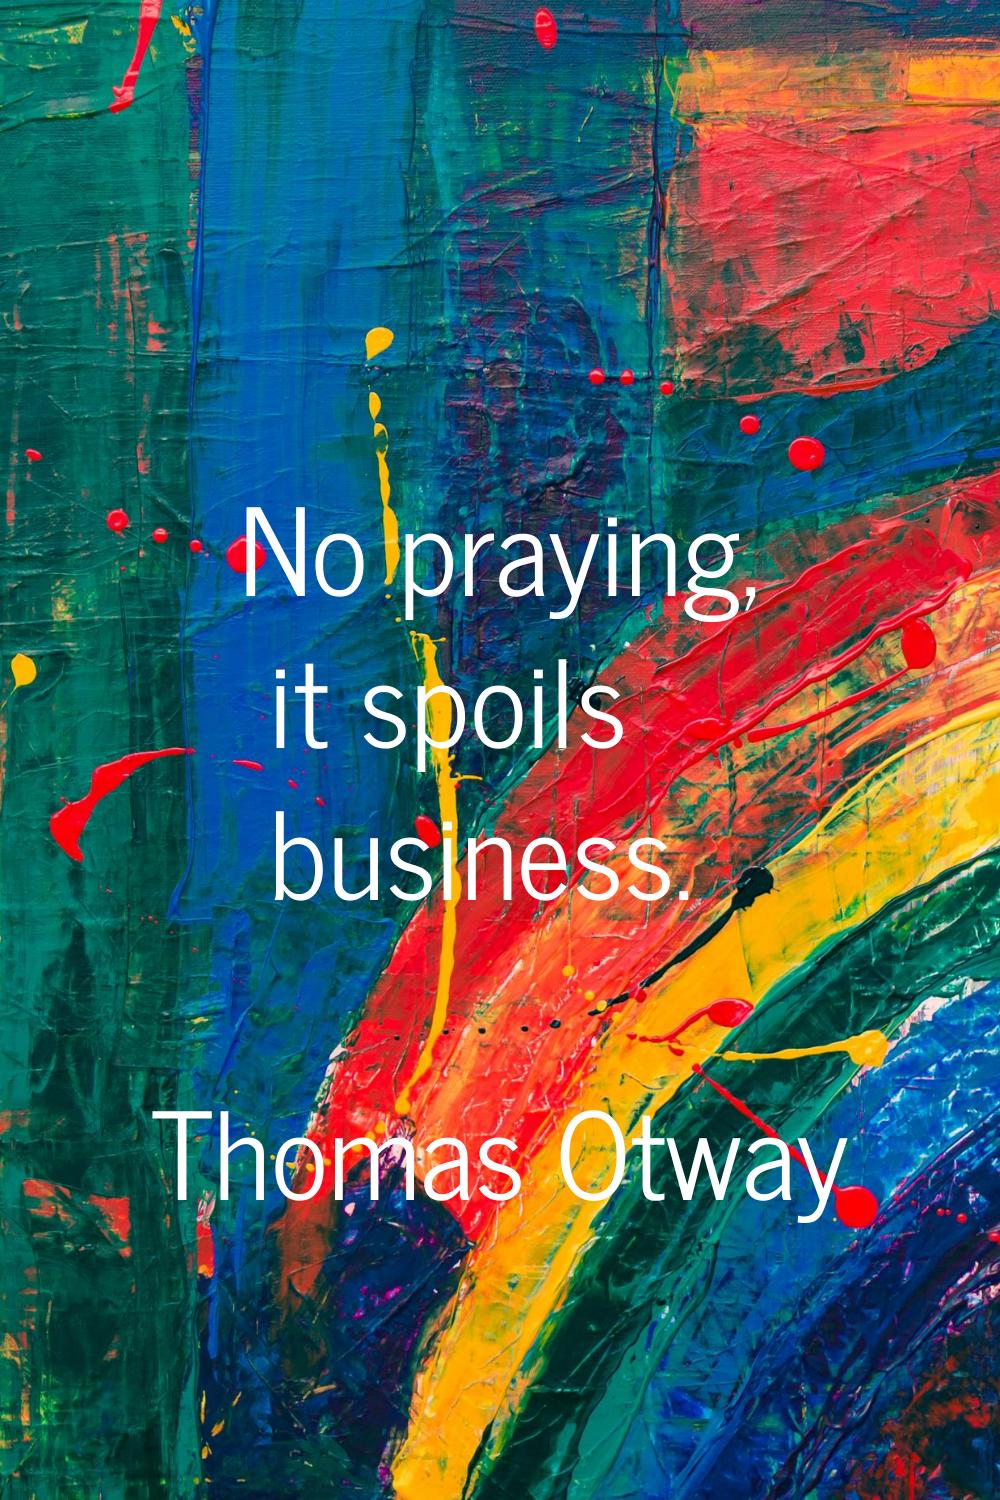 No praying, it spoils business.